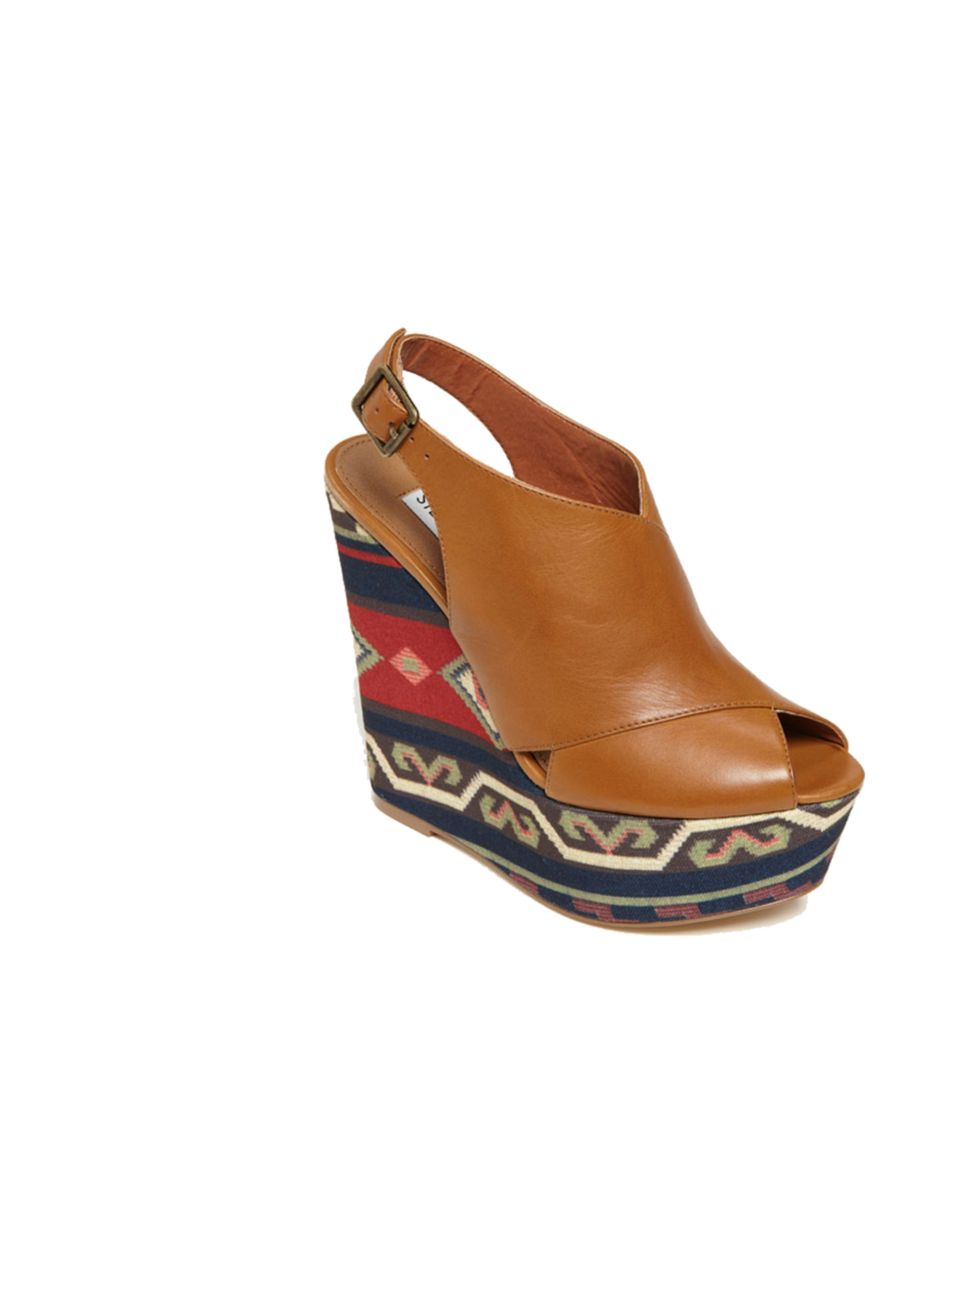 <p>Steve Madden tribal wedge sandals, £83.28, at Nordstrom</p><p><a href="http://shopping.elleuk.com/browse?fts=steve+madden+elisaa+sandal">BUY NOW</a></p>